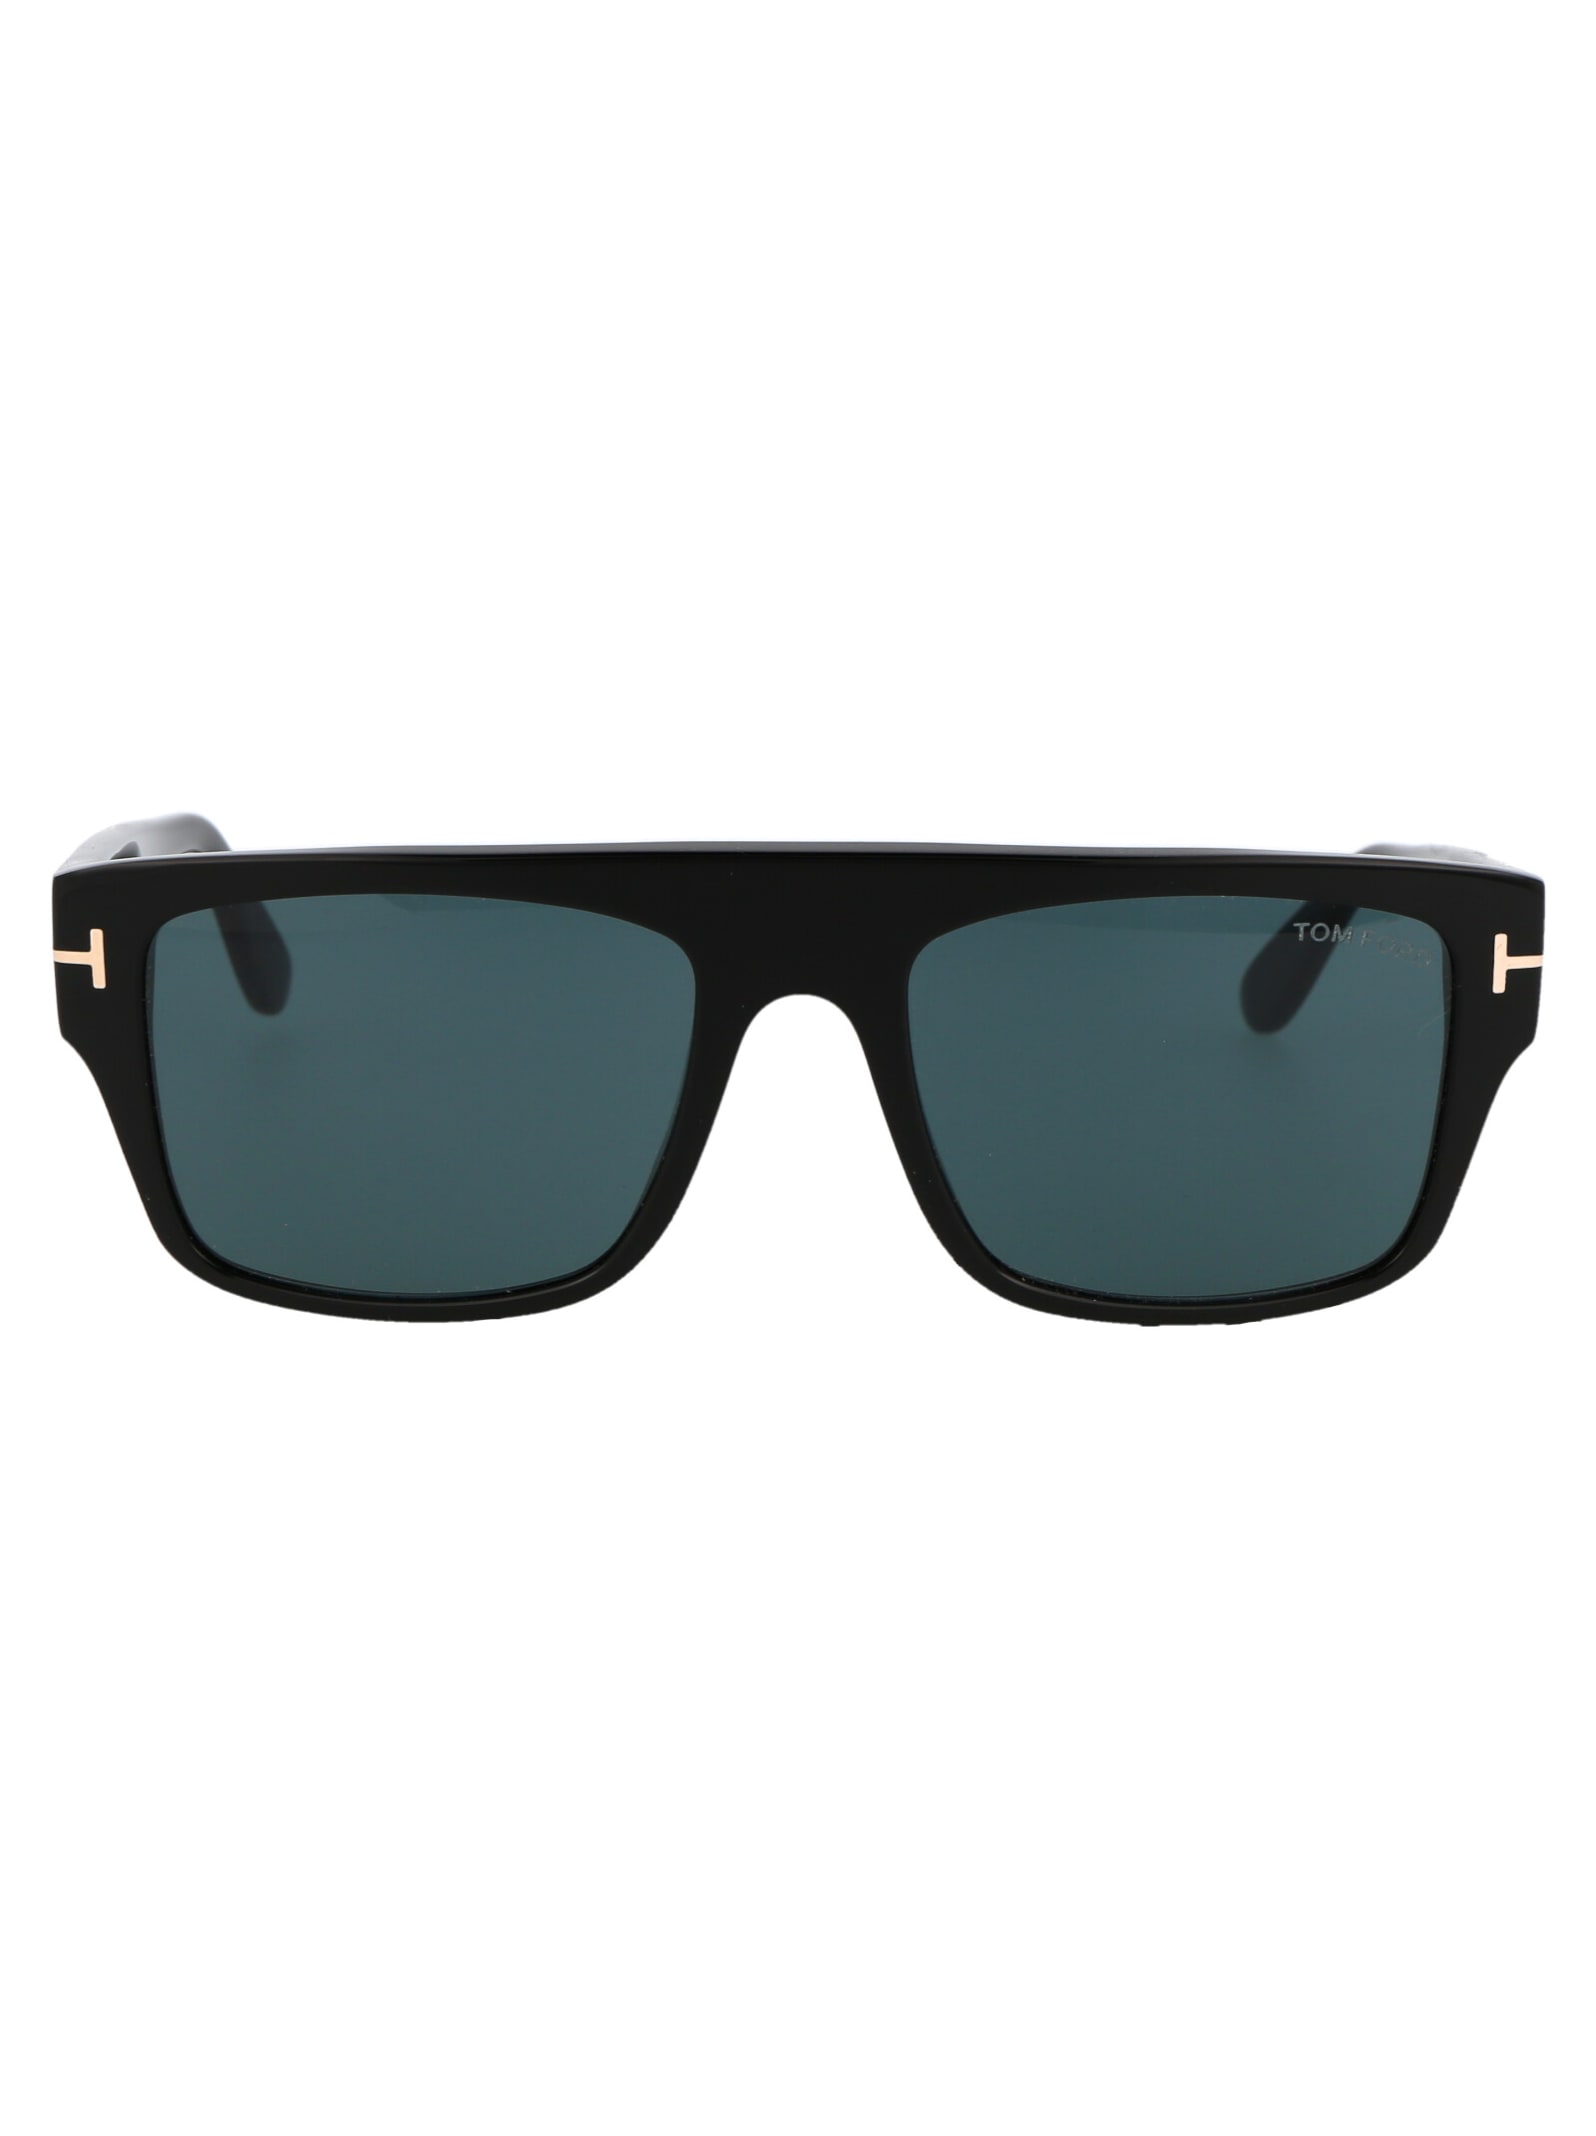 Tom Ford Dunning-02 Sunglasses In 01v Nero Lucido / Blu